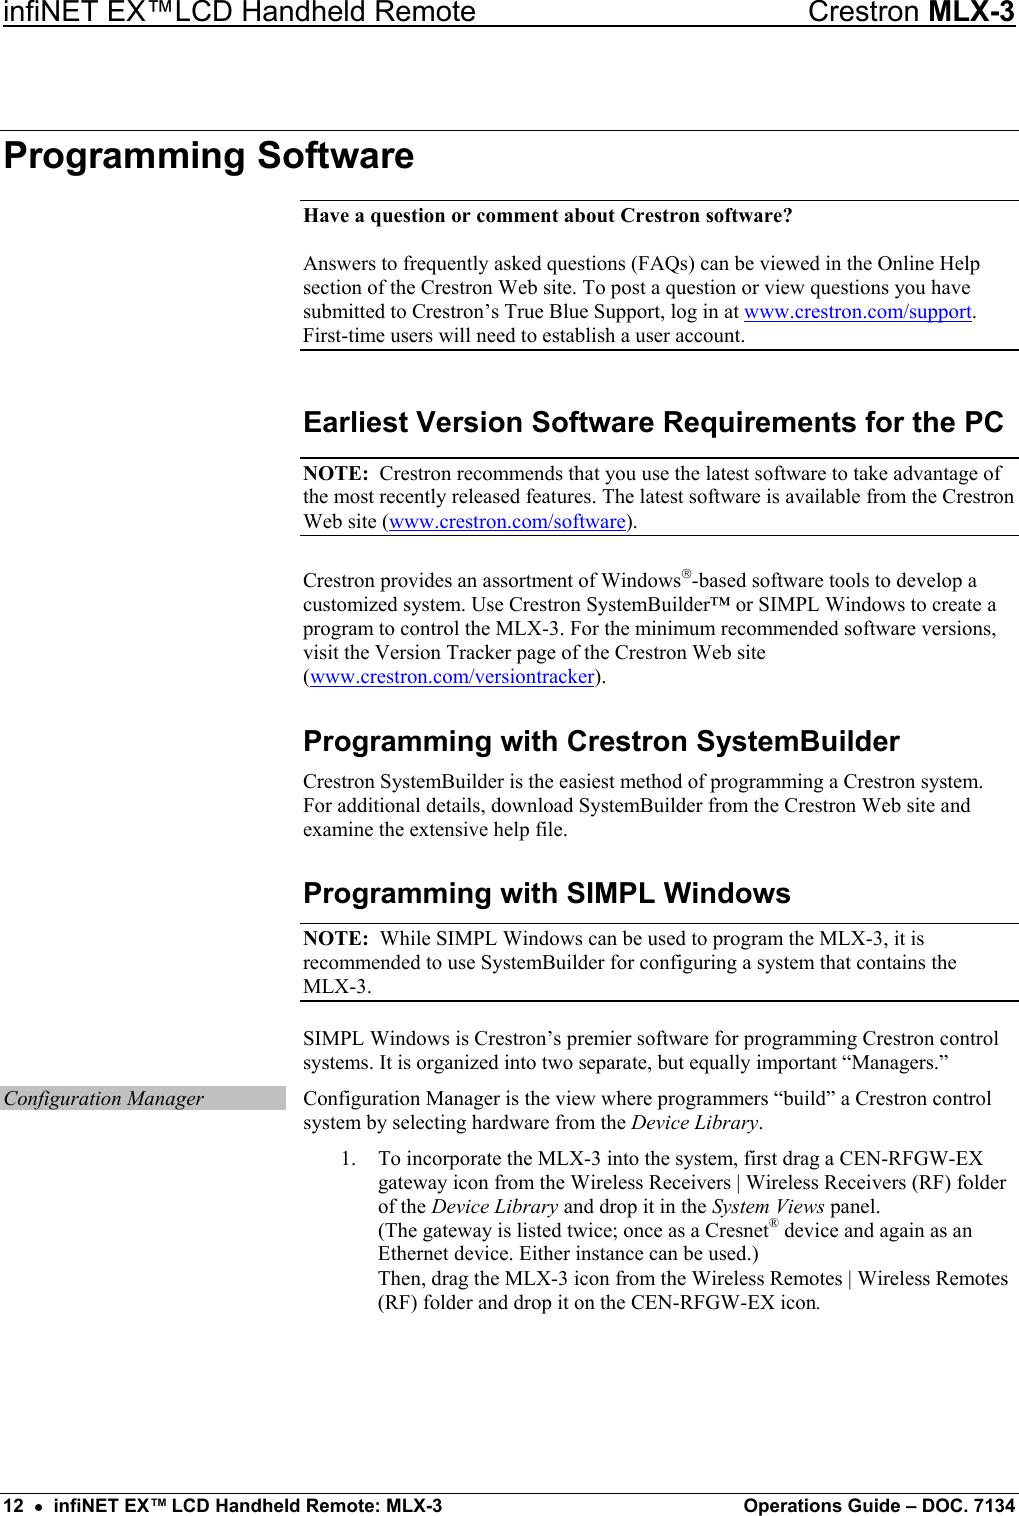 Crestron programming software download